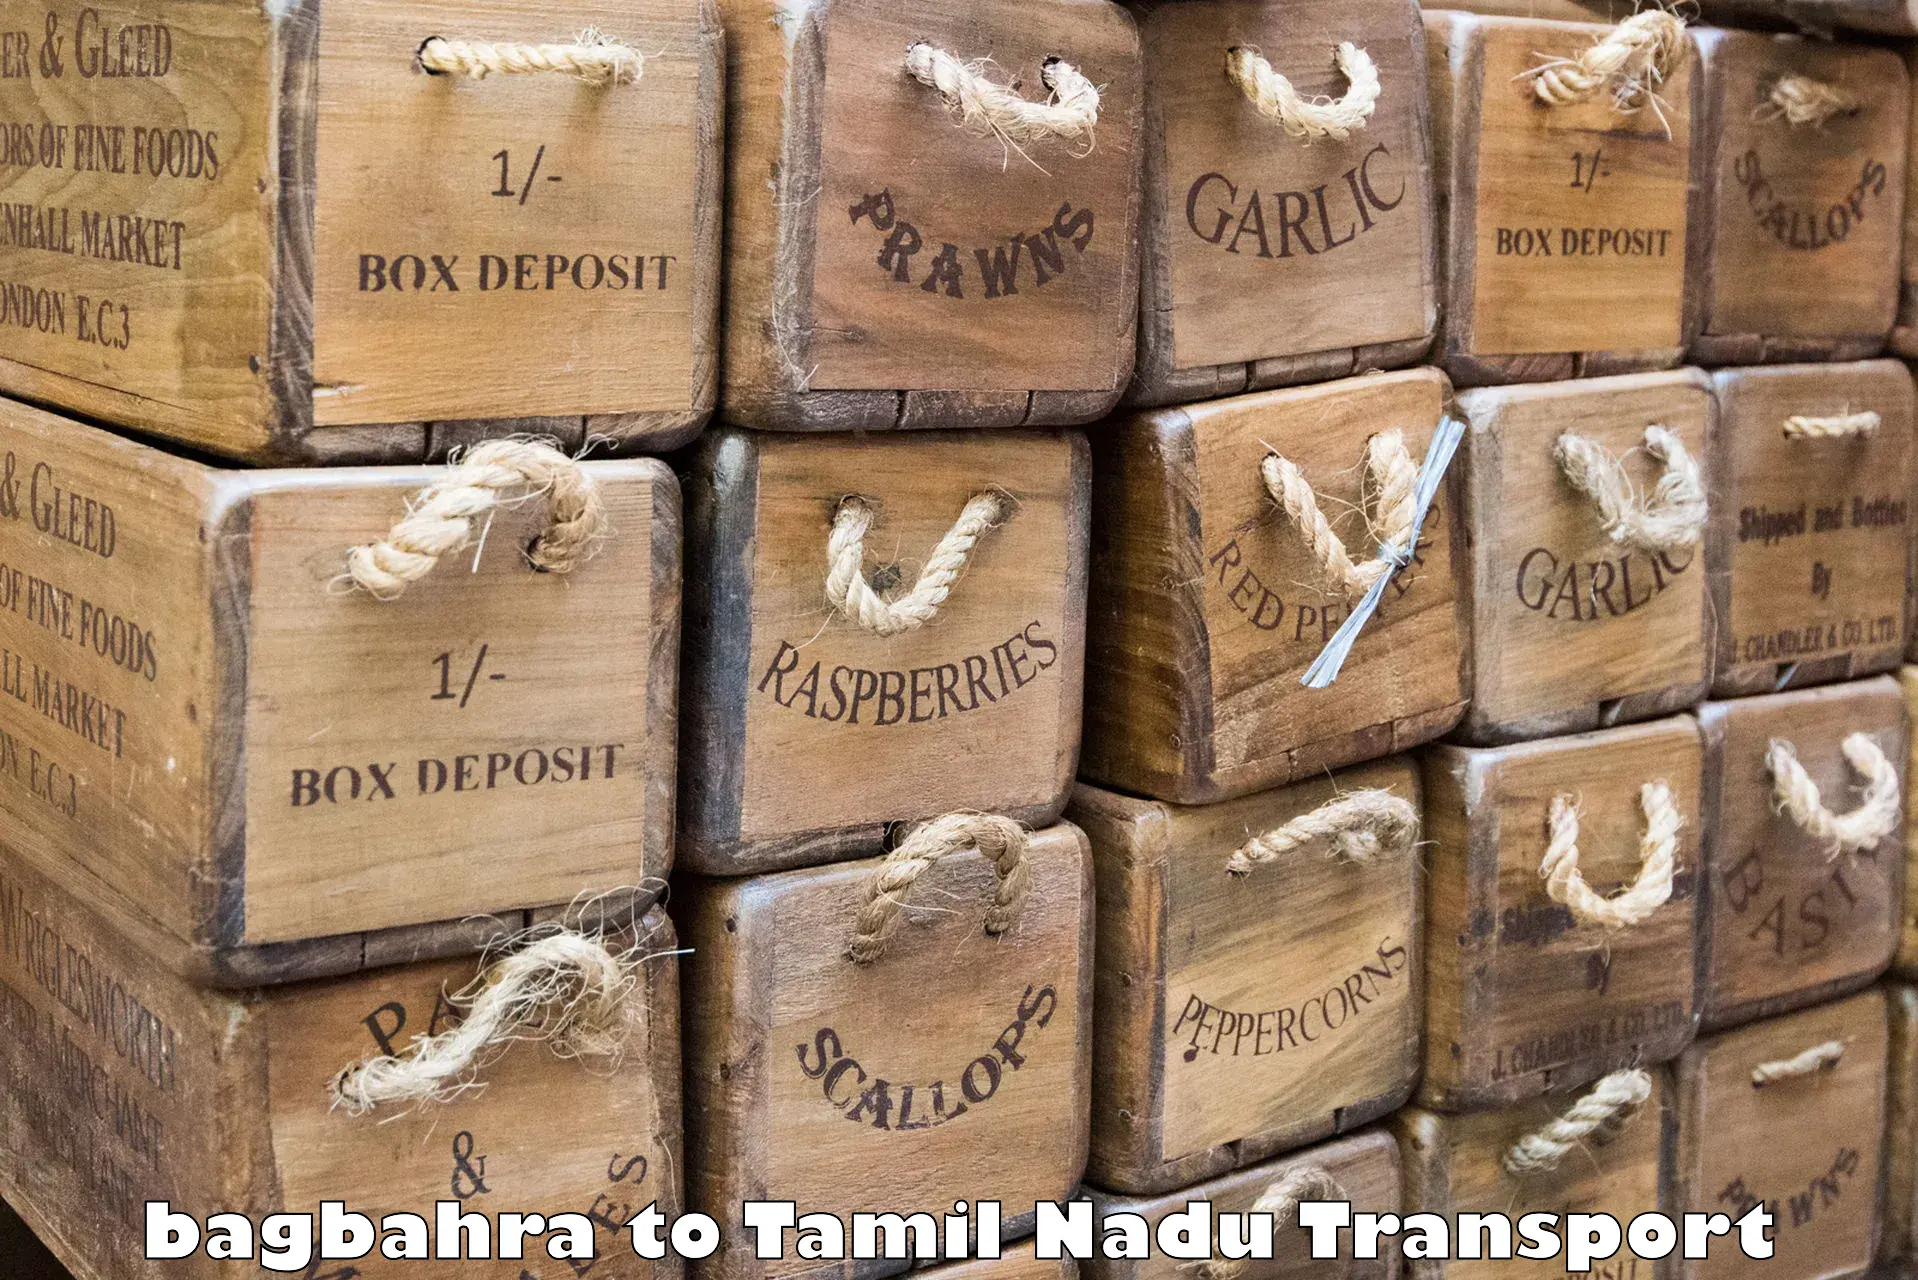 Pick up transport service bagbahra to Tamil Nadu